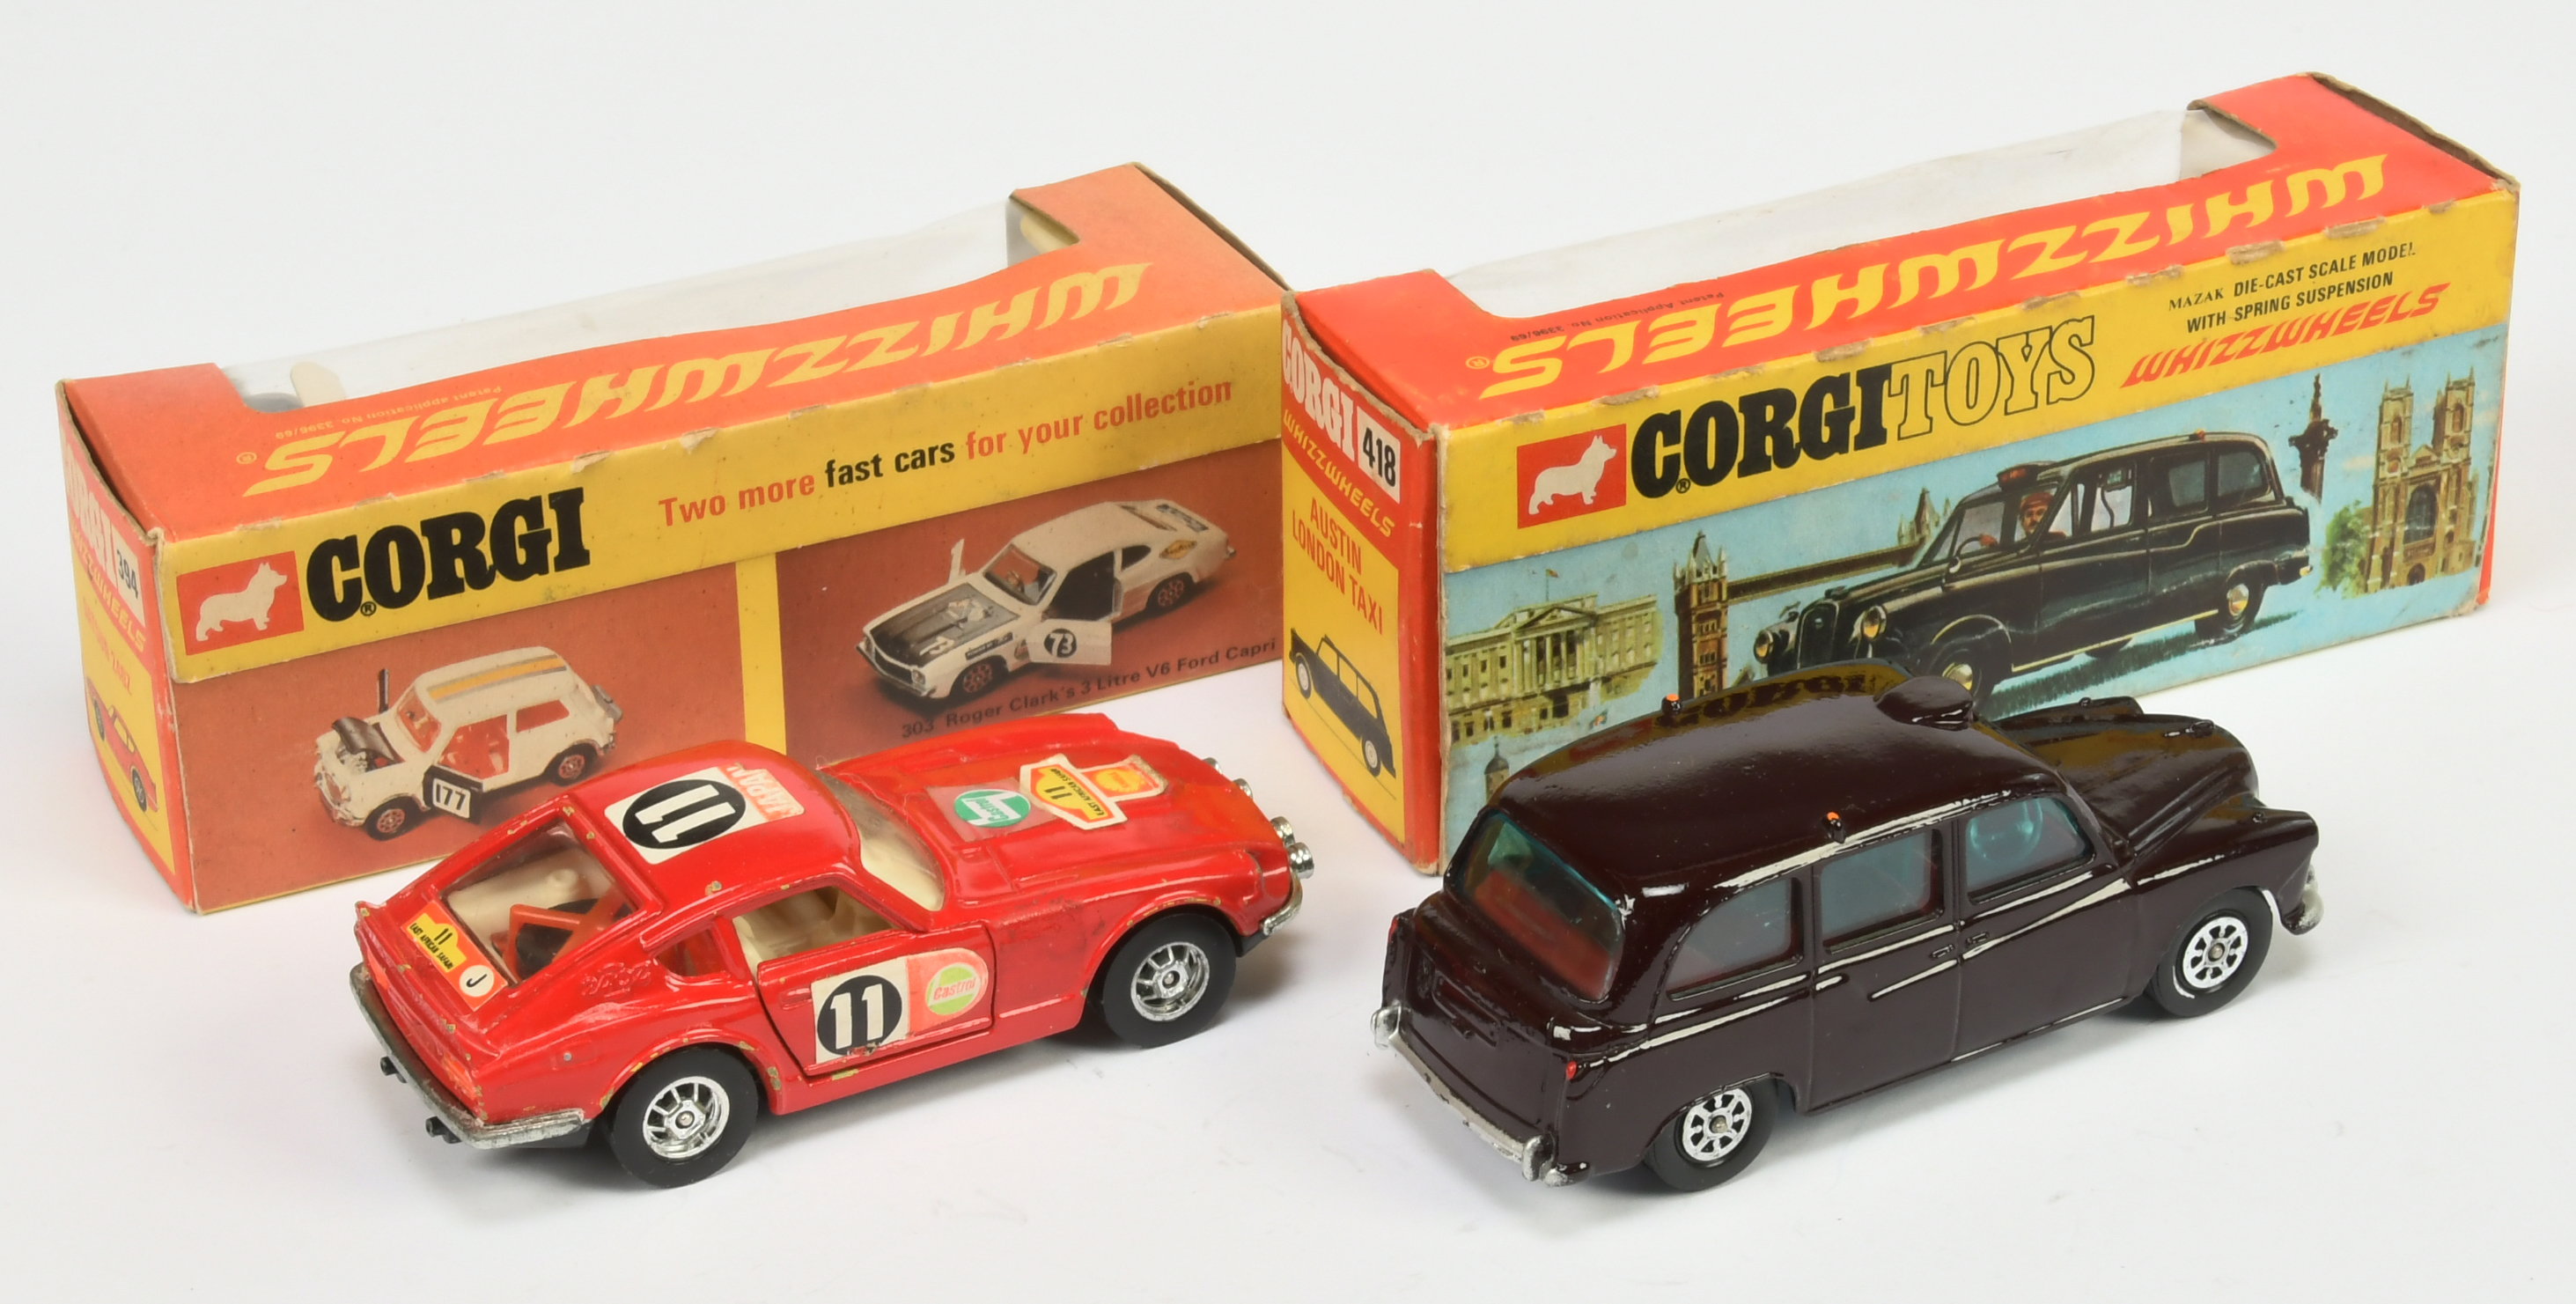 Corgi Toys Whizzwheels A Pair - (1) 394 Datsun 240Z "East African Safari" - Red body, off white i... - Image 2 of 2